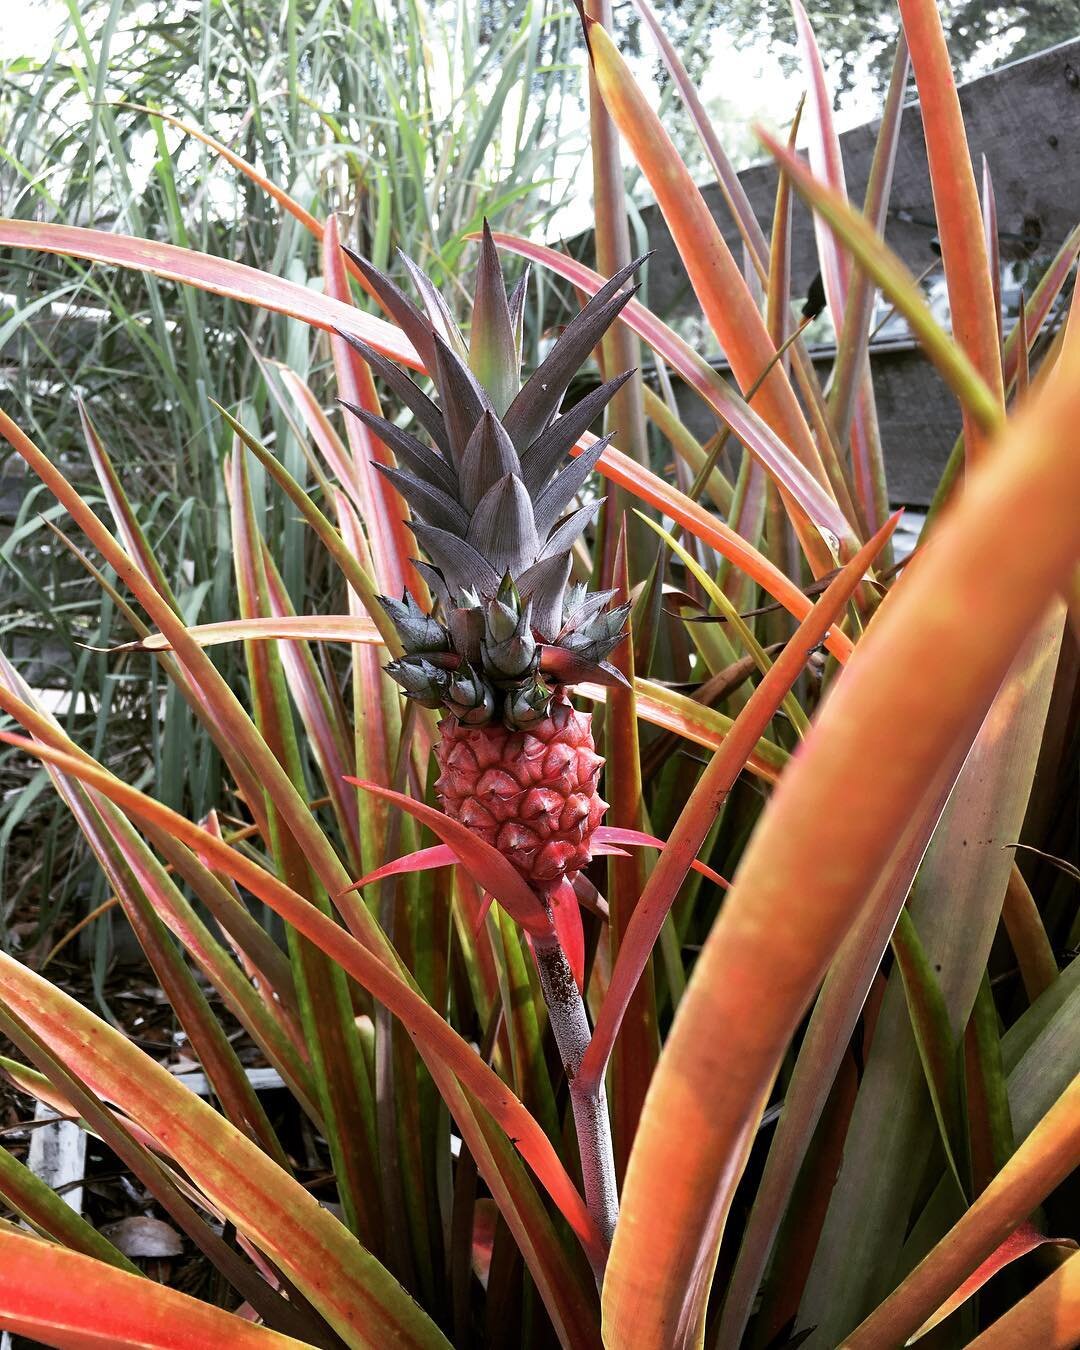 ✨🍍❤️
&bull;
&bull;
&bull;
#pineapple #love #summer #sarasota #srq #locallove #florida #garden #indigenous #nature #growing #adorable #cutest #little #baby #fruit